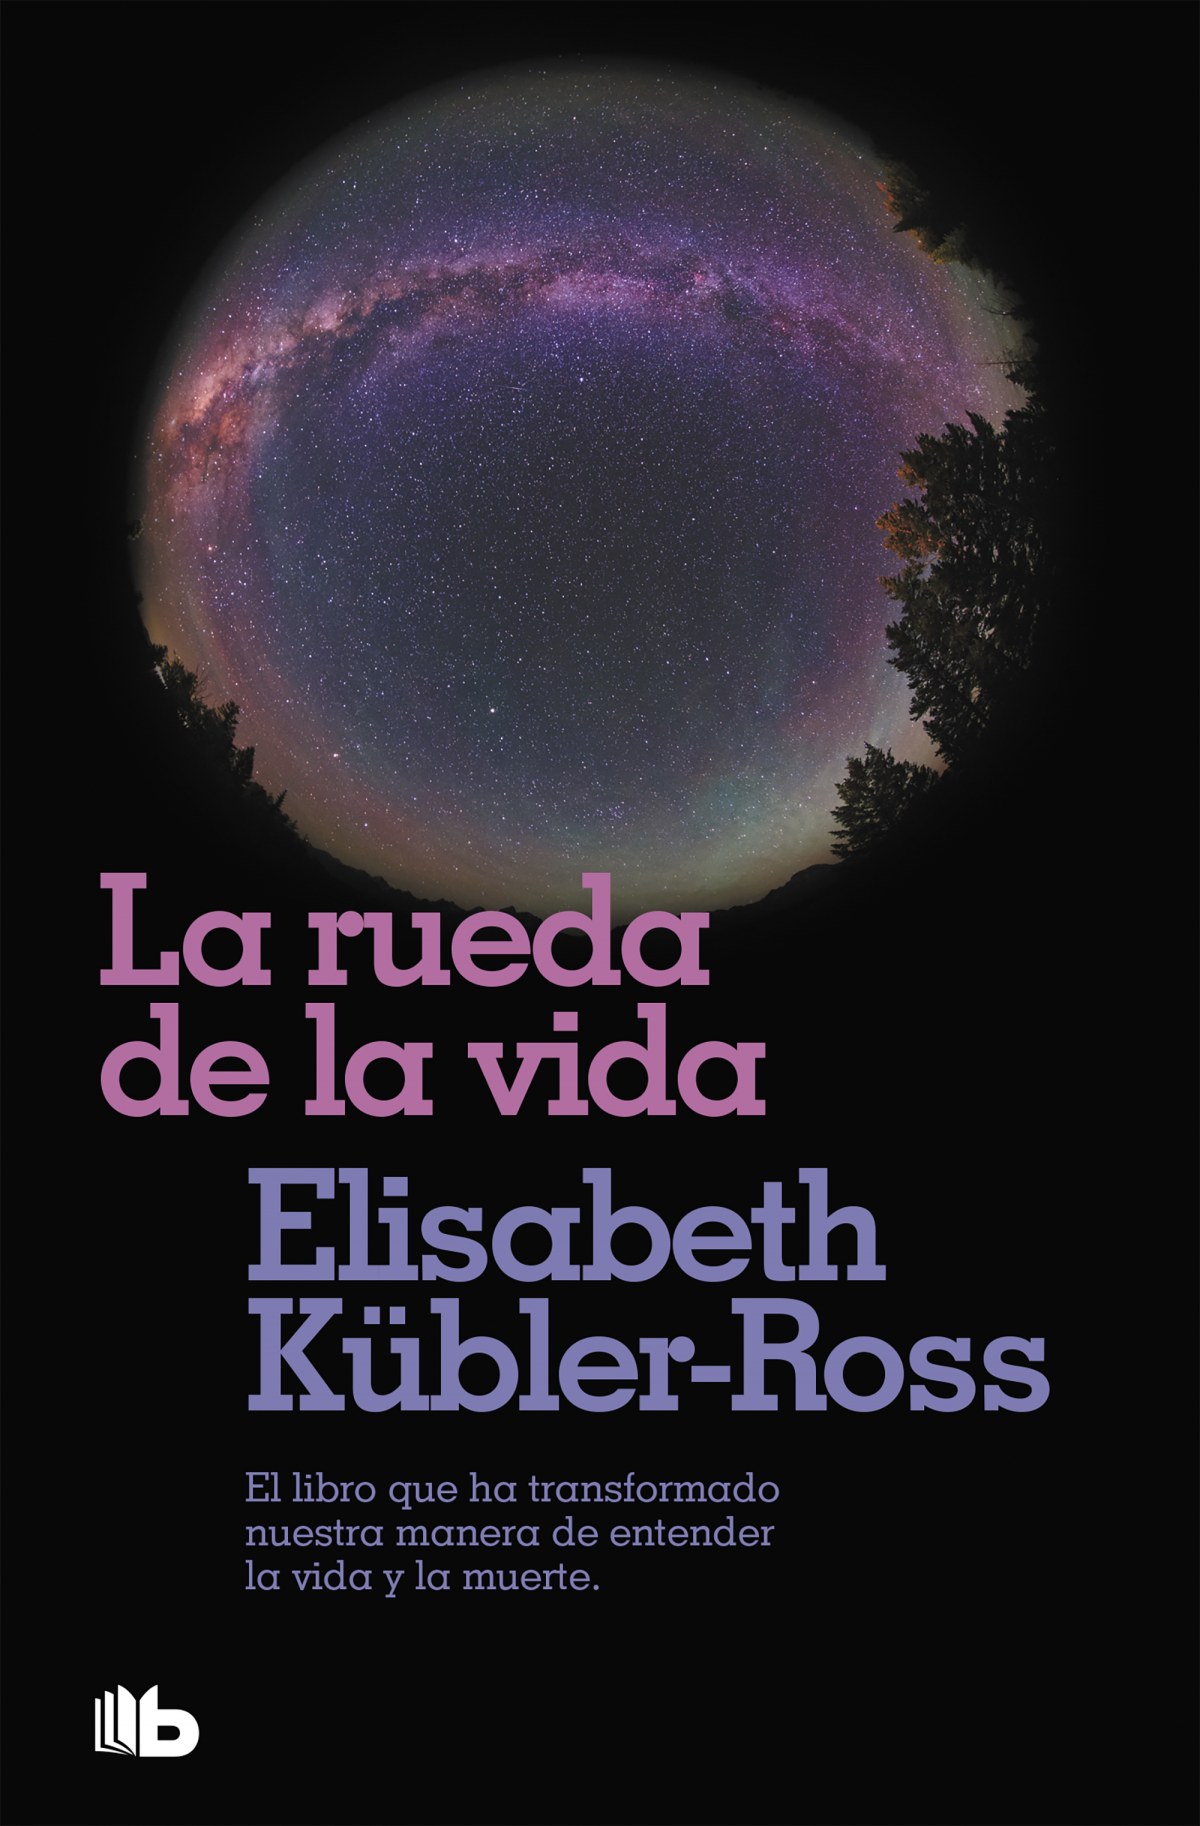 Rueda de la vida, la - Kubler-ross, Elisabeth